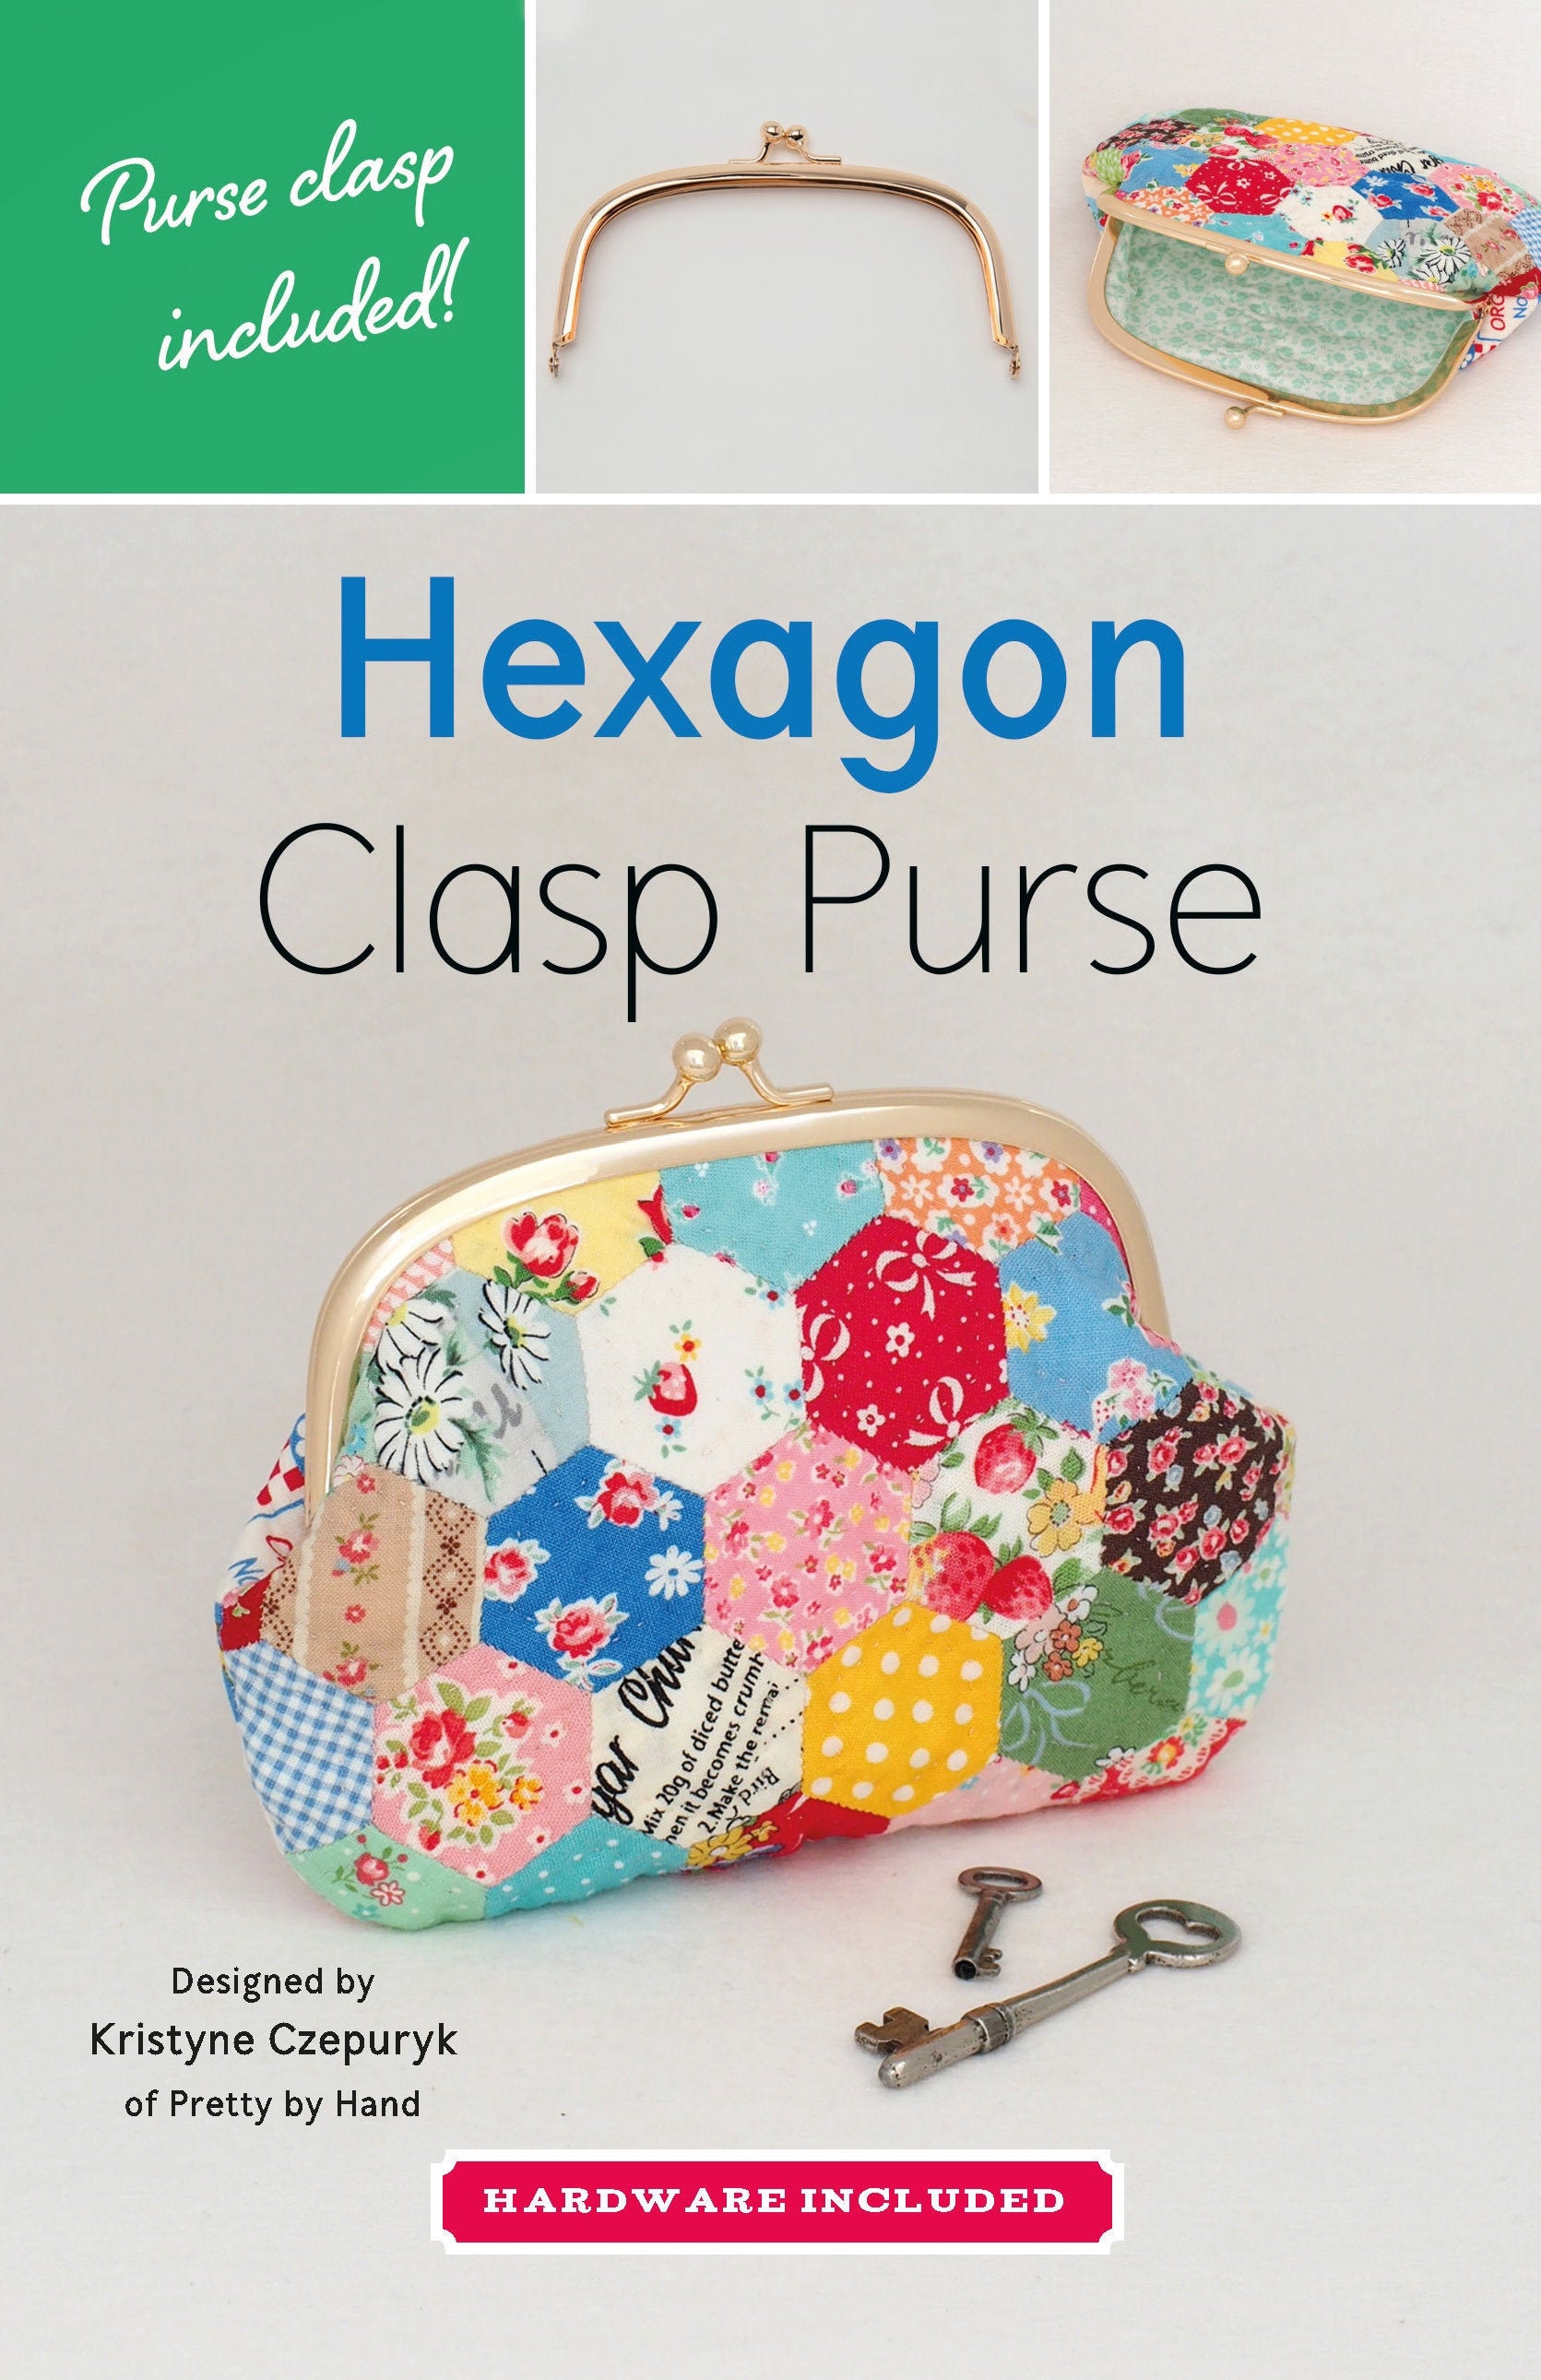 Women Wallets Purses Luxury Multi Colorful Patchwork Handbag Stitching  Rainbow Bird Metal Logo Phone Clutch Bag - AliExpress